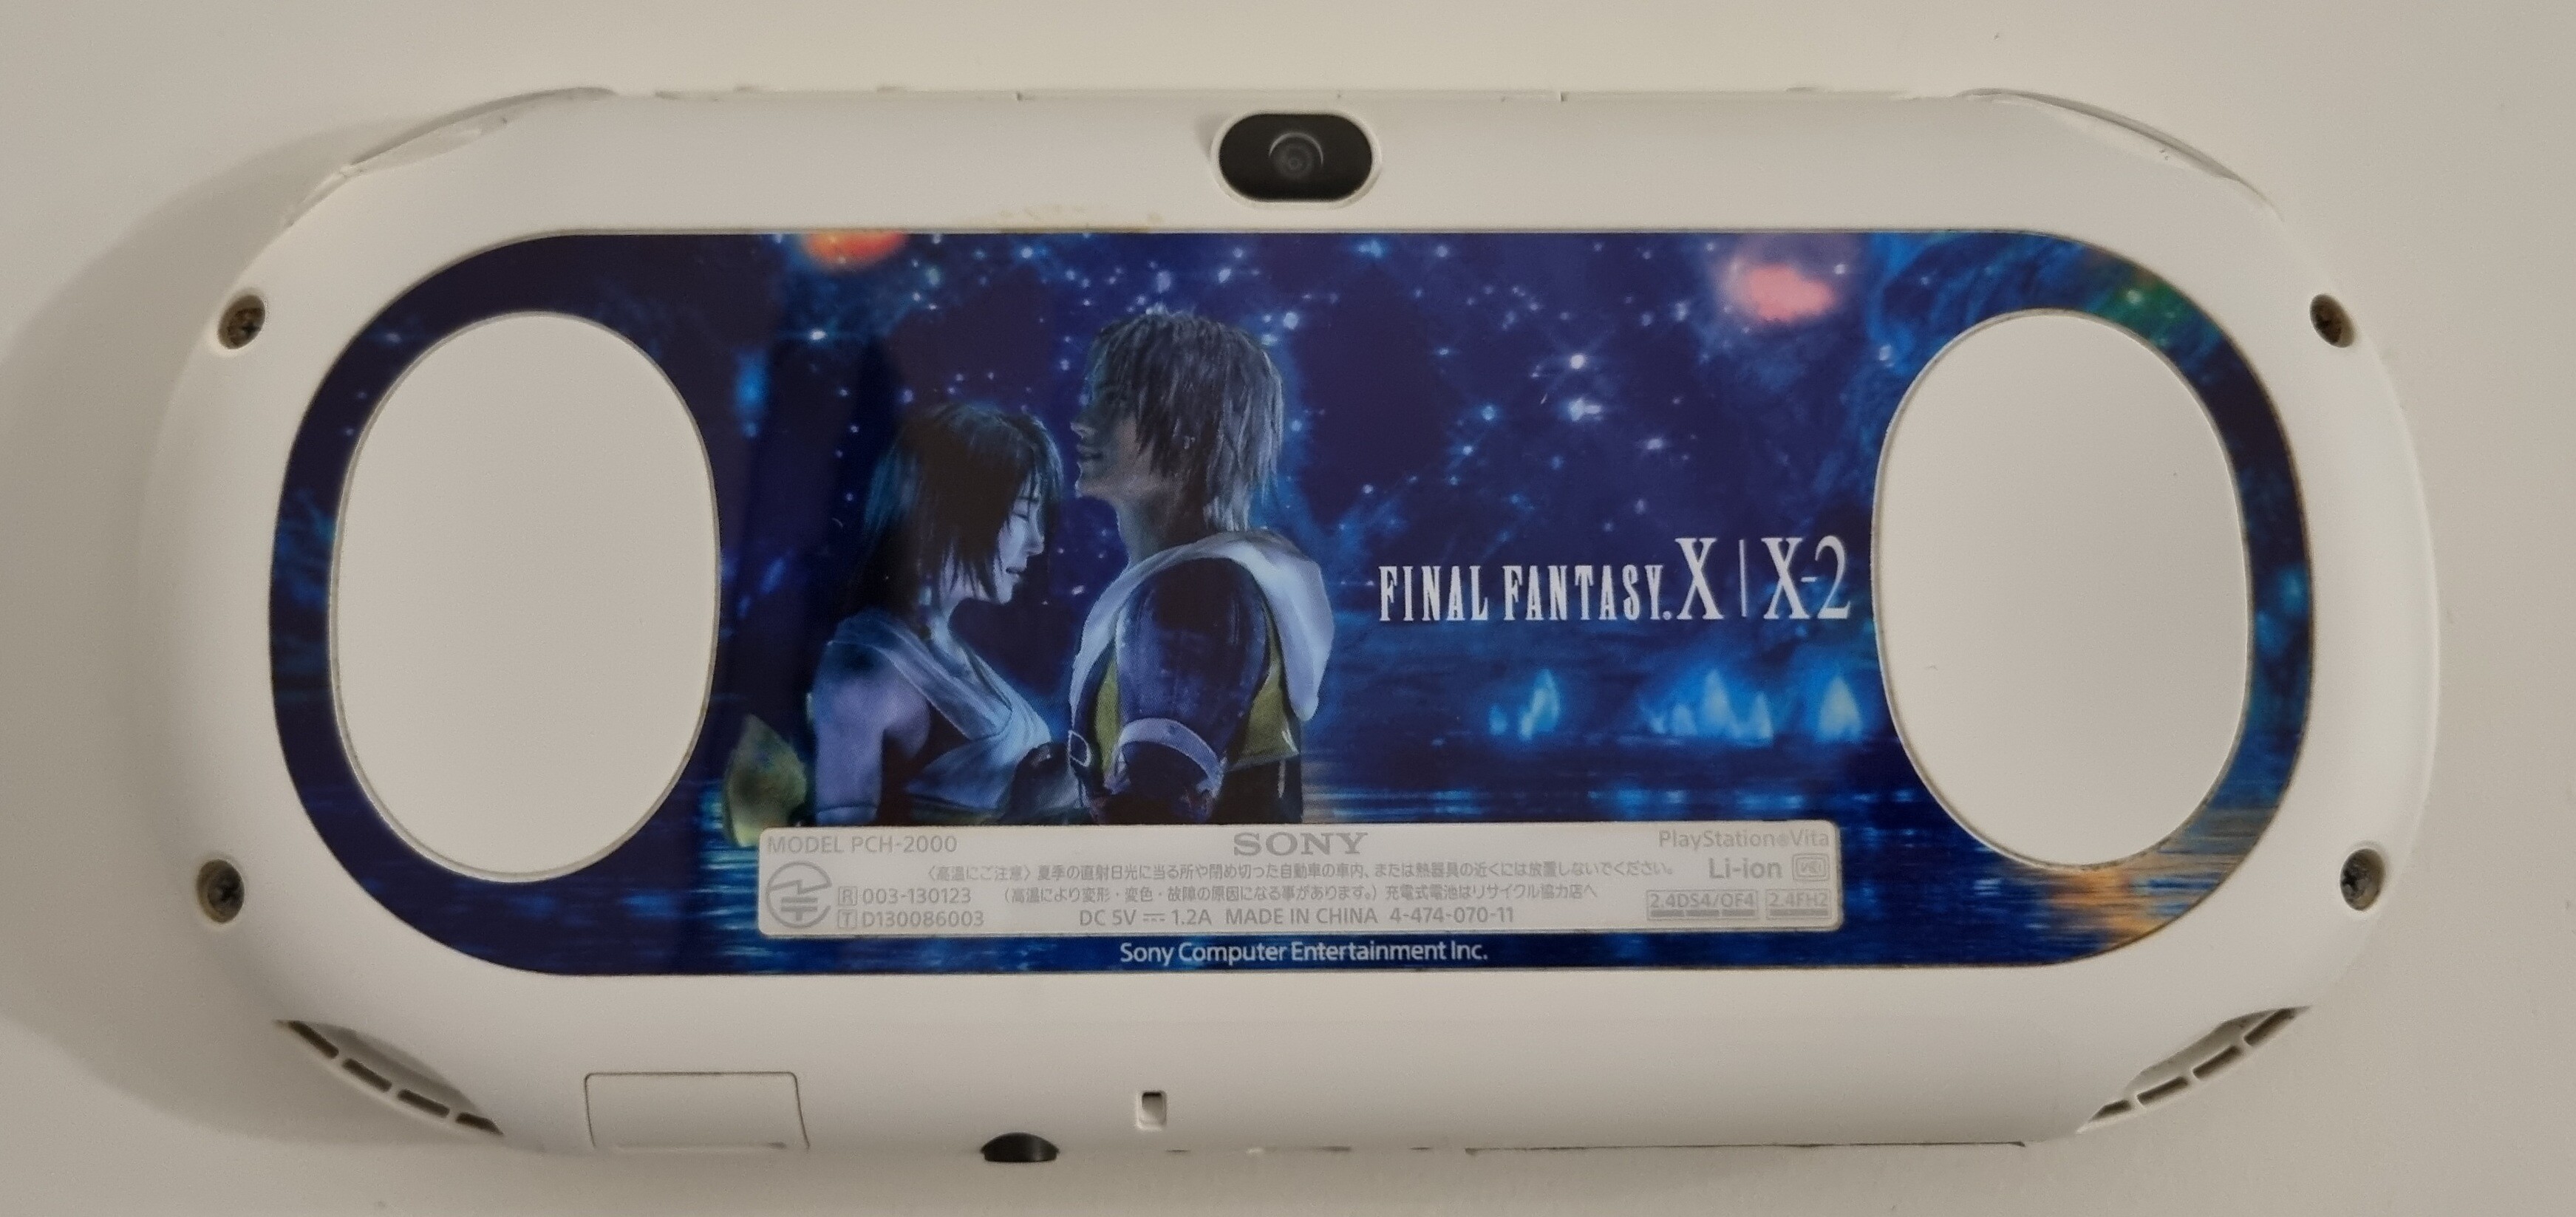  Sony PS Vita Slim Final Fantasy X/X-2 HD Console